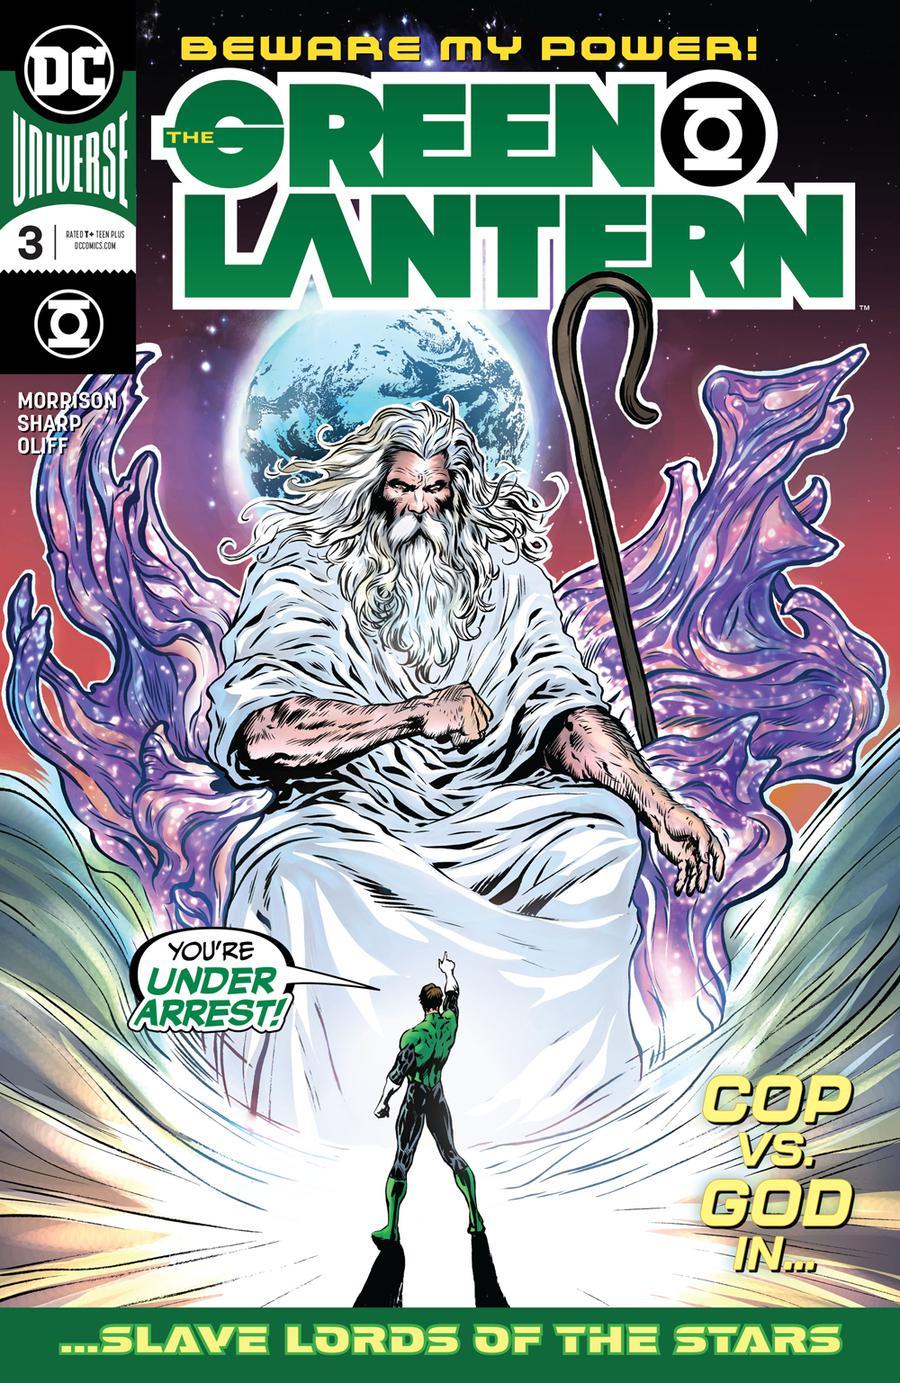 Green Lantern Vol. 6 #3